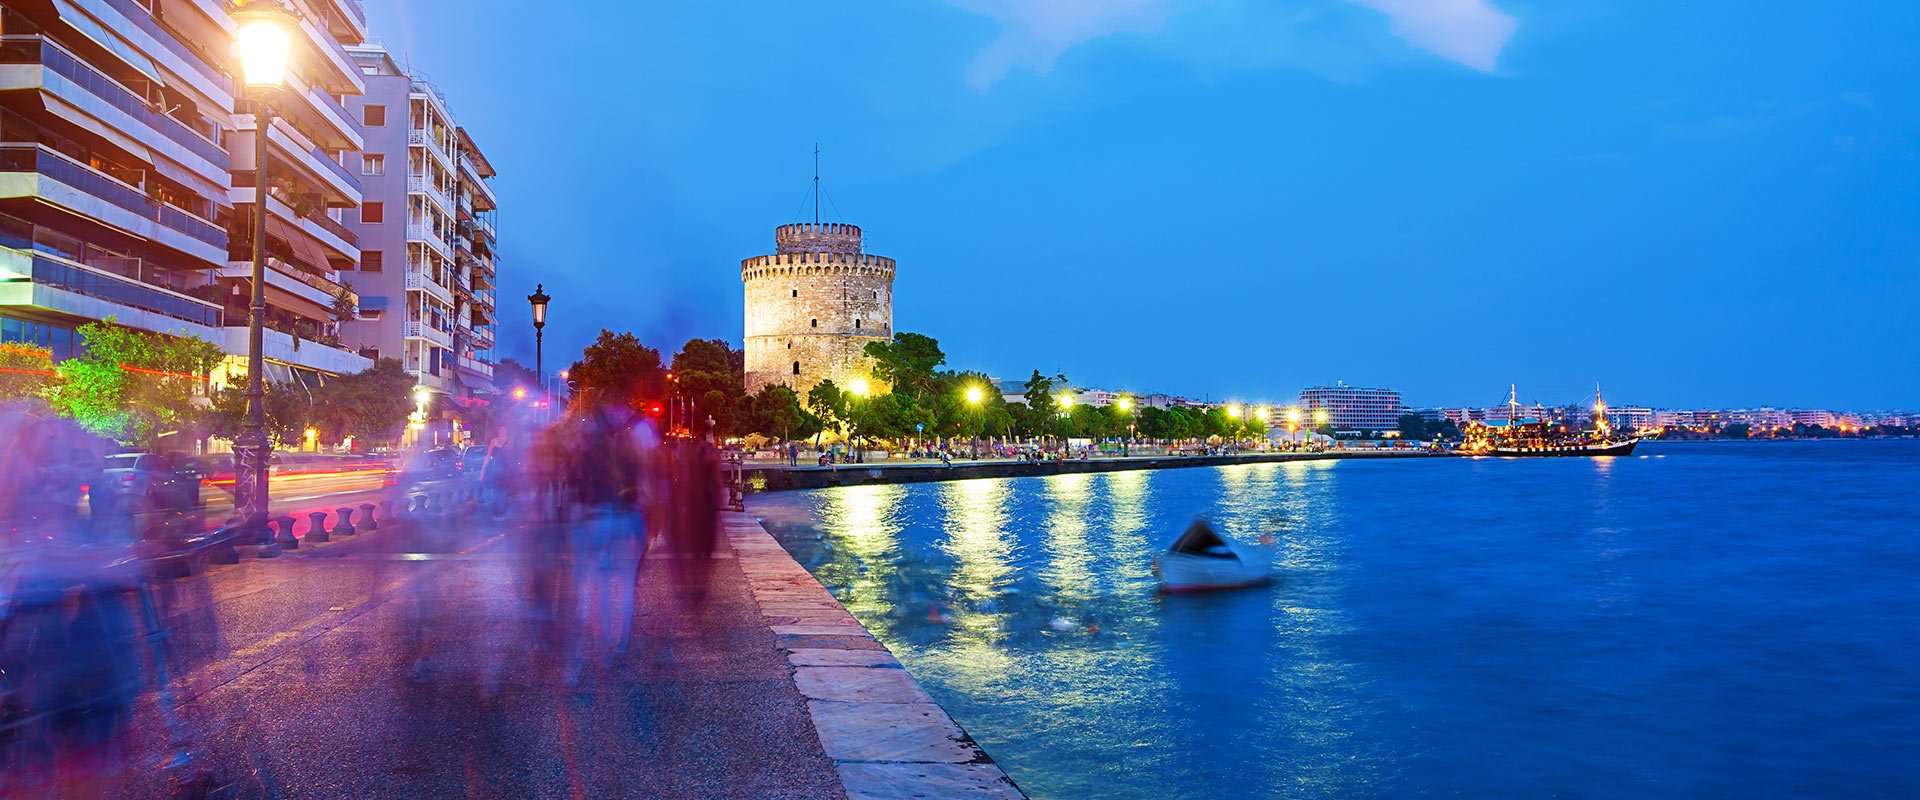 Thessaloniki White Tower view